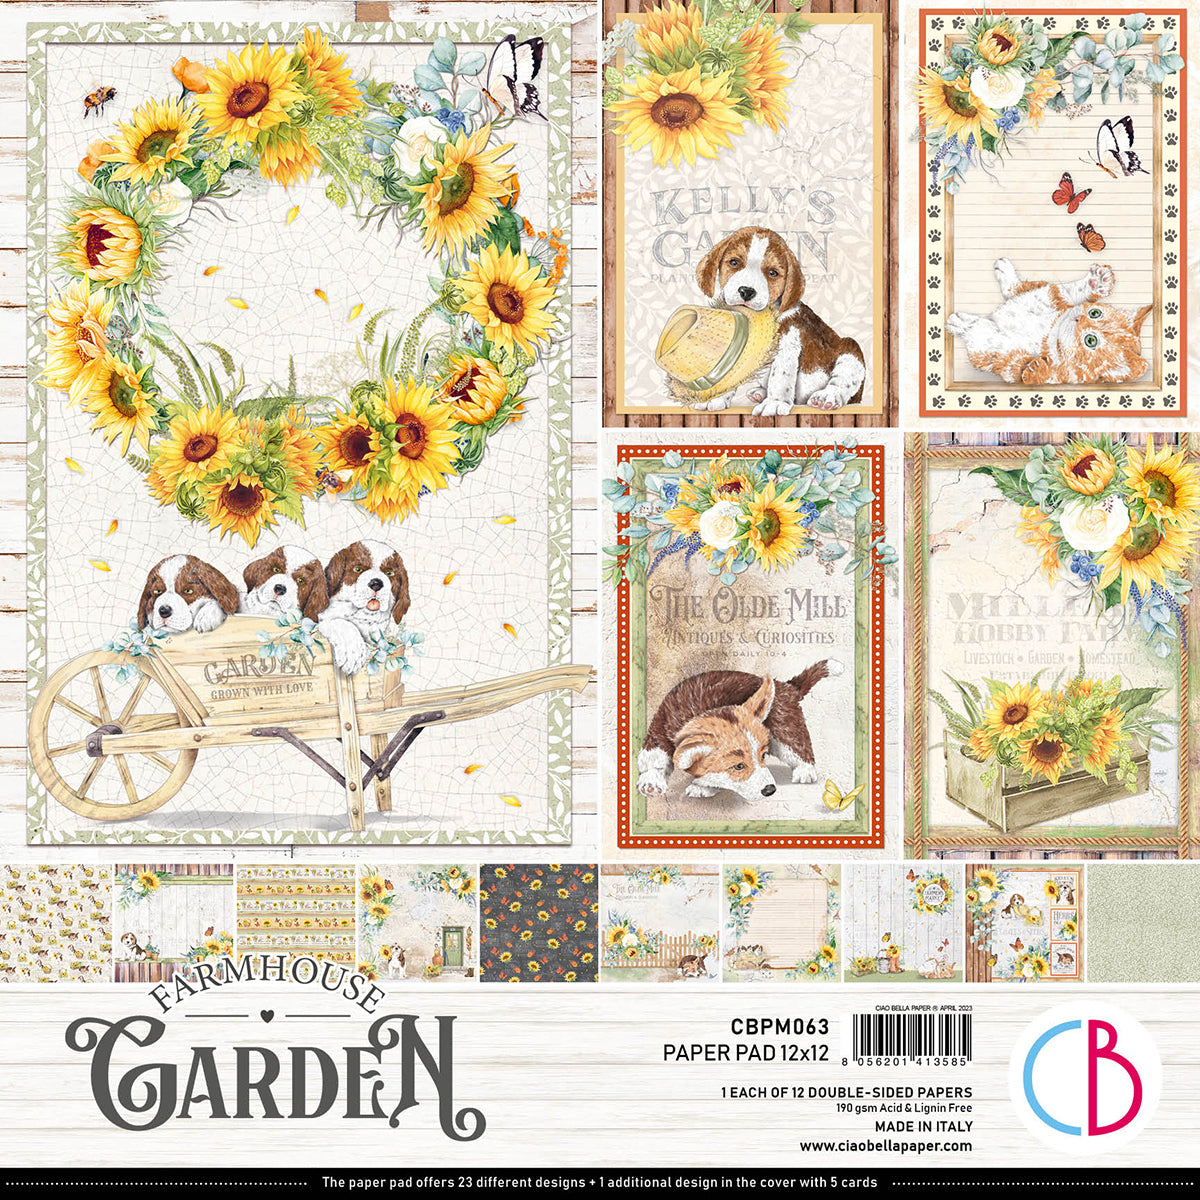 Ciao Bella Farmhouse Garden Paper Pad 12"x12" 12/Pkg